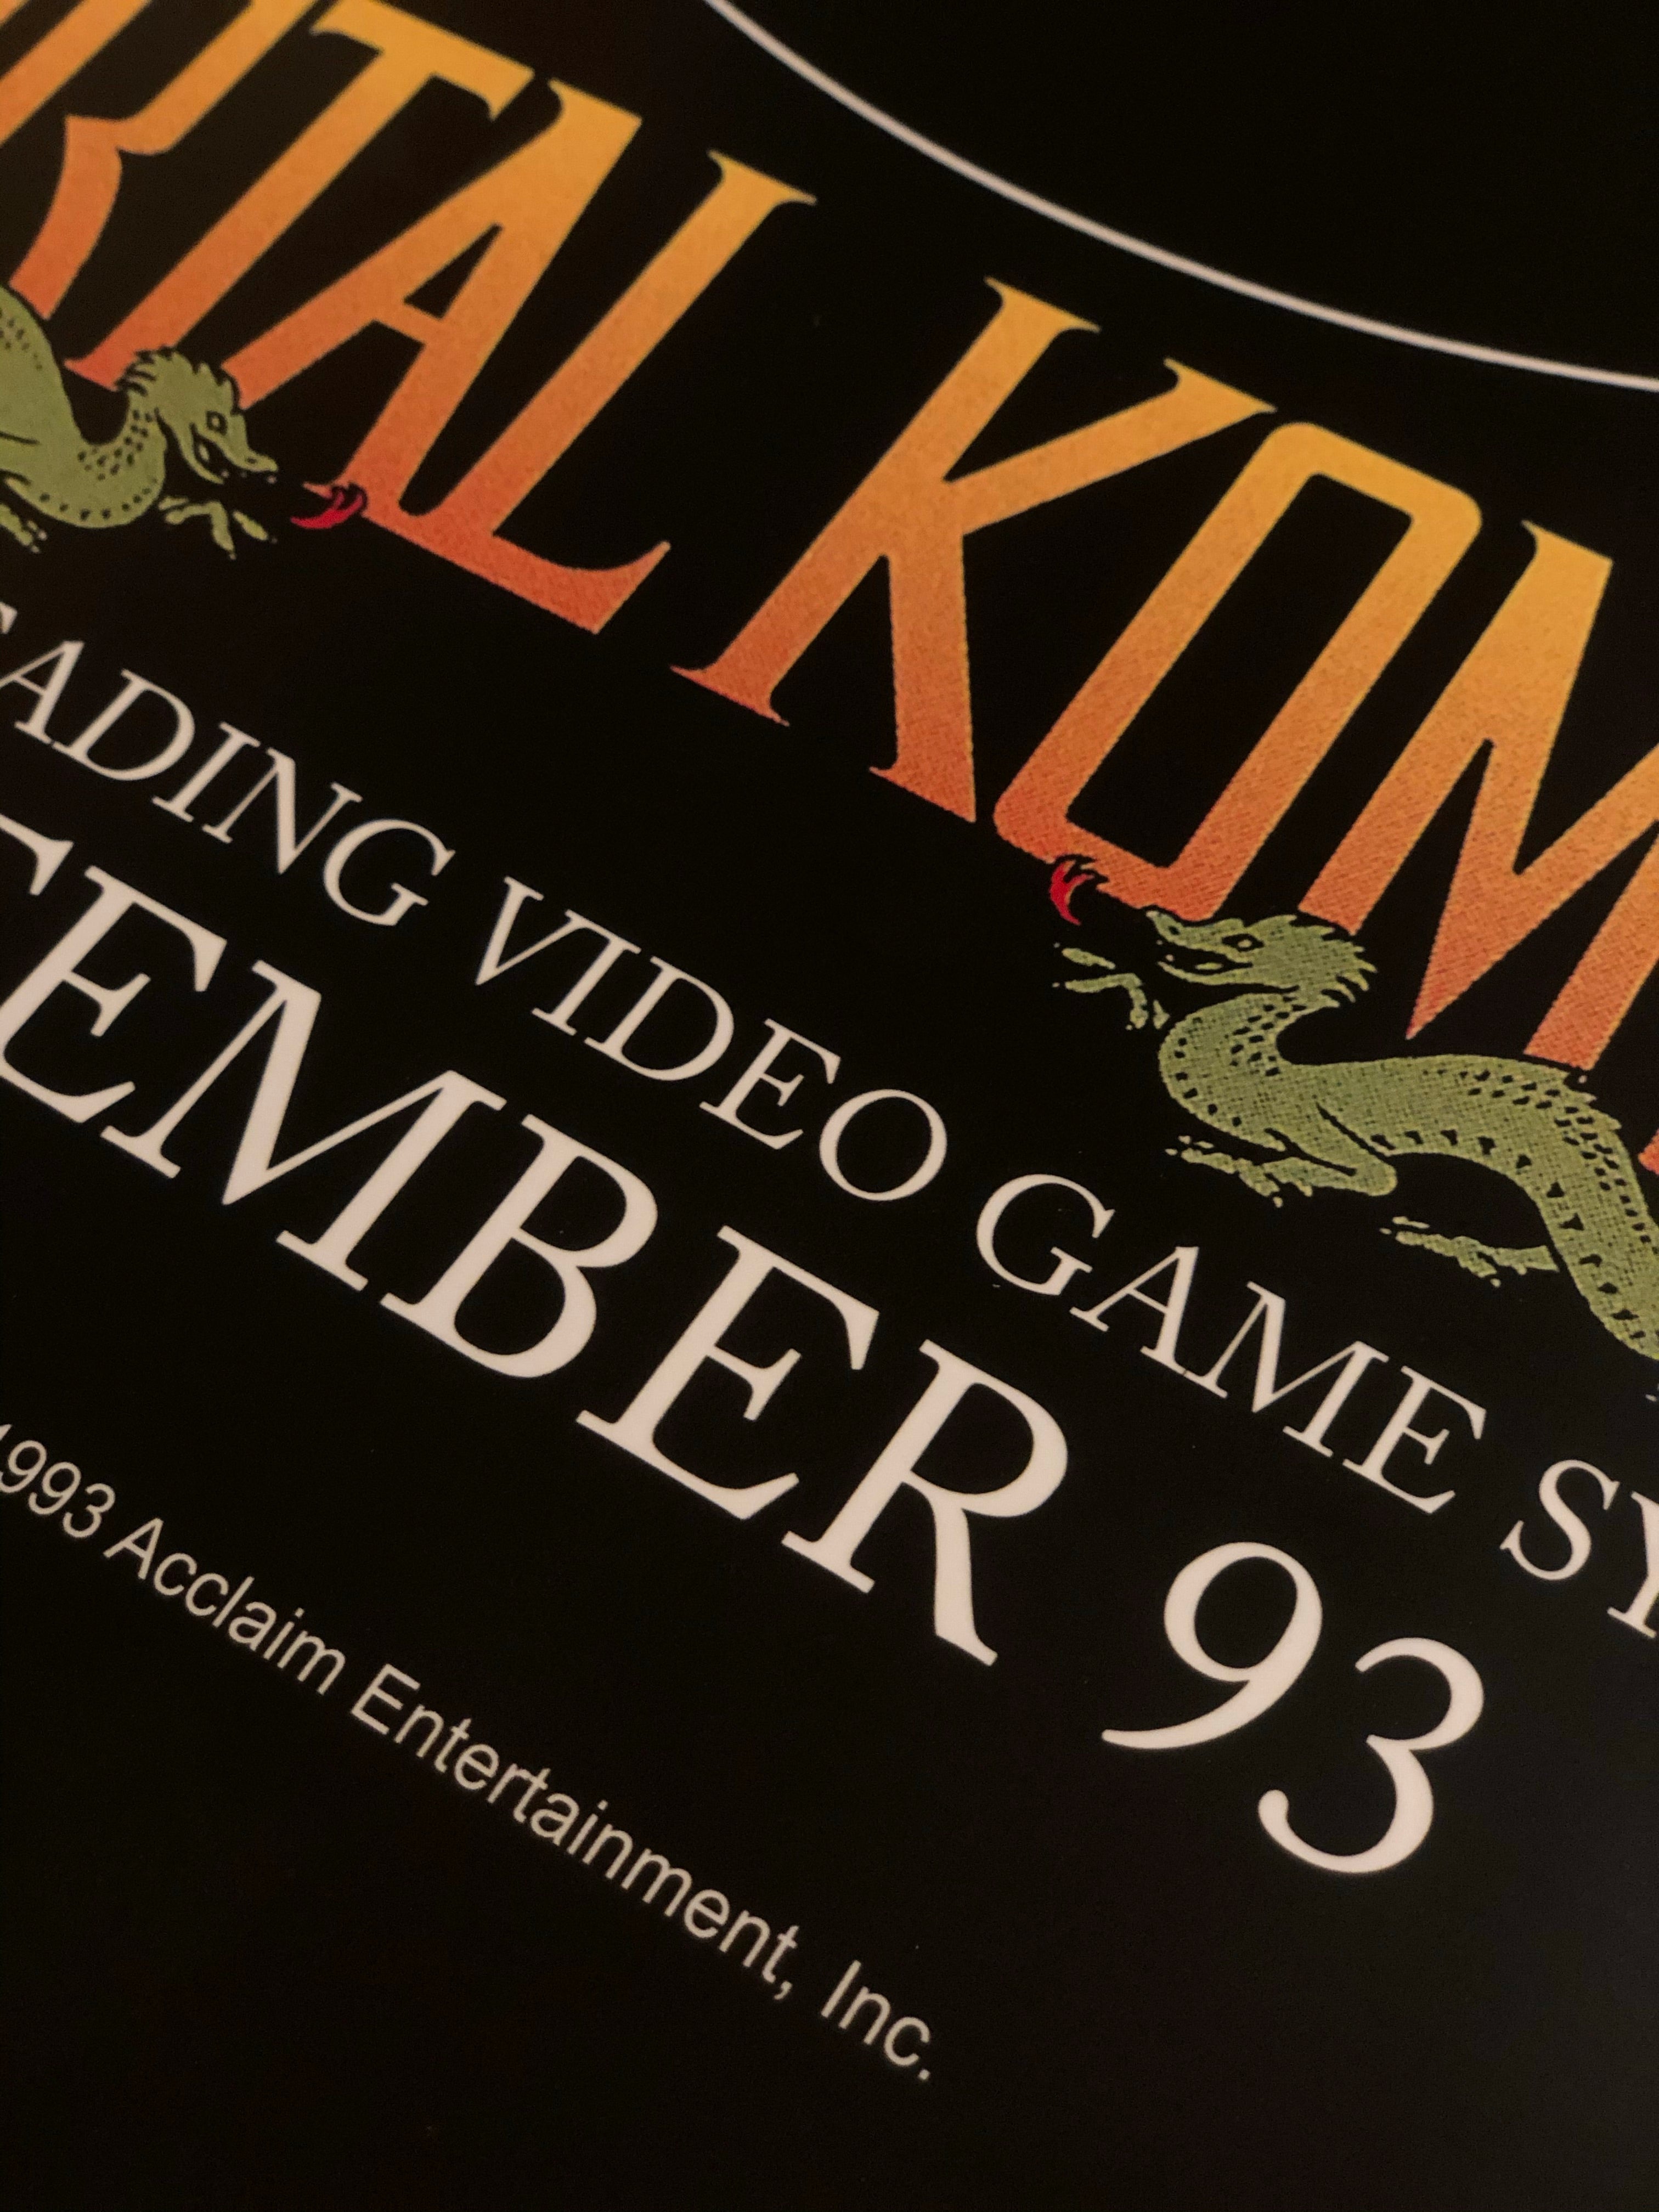 Mortal Kombat Video Game Magazine Ad Poster